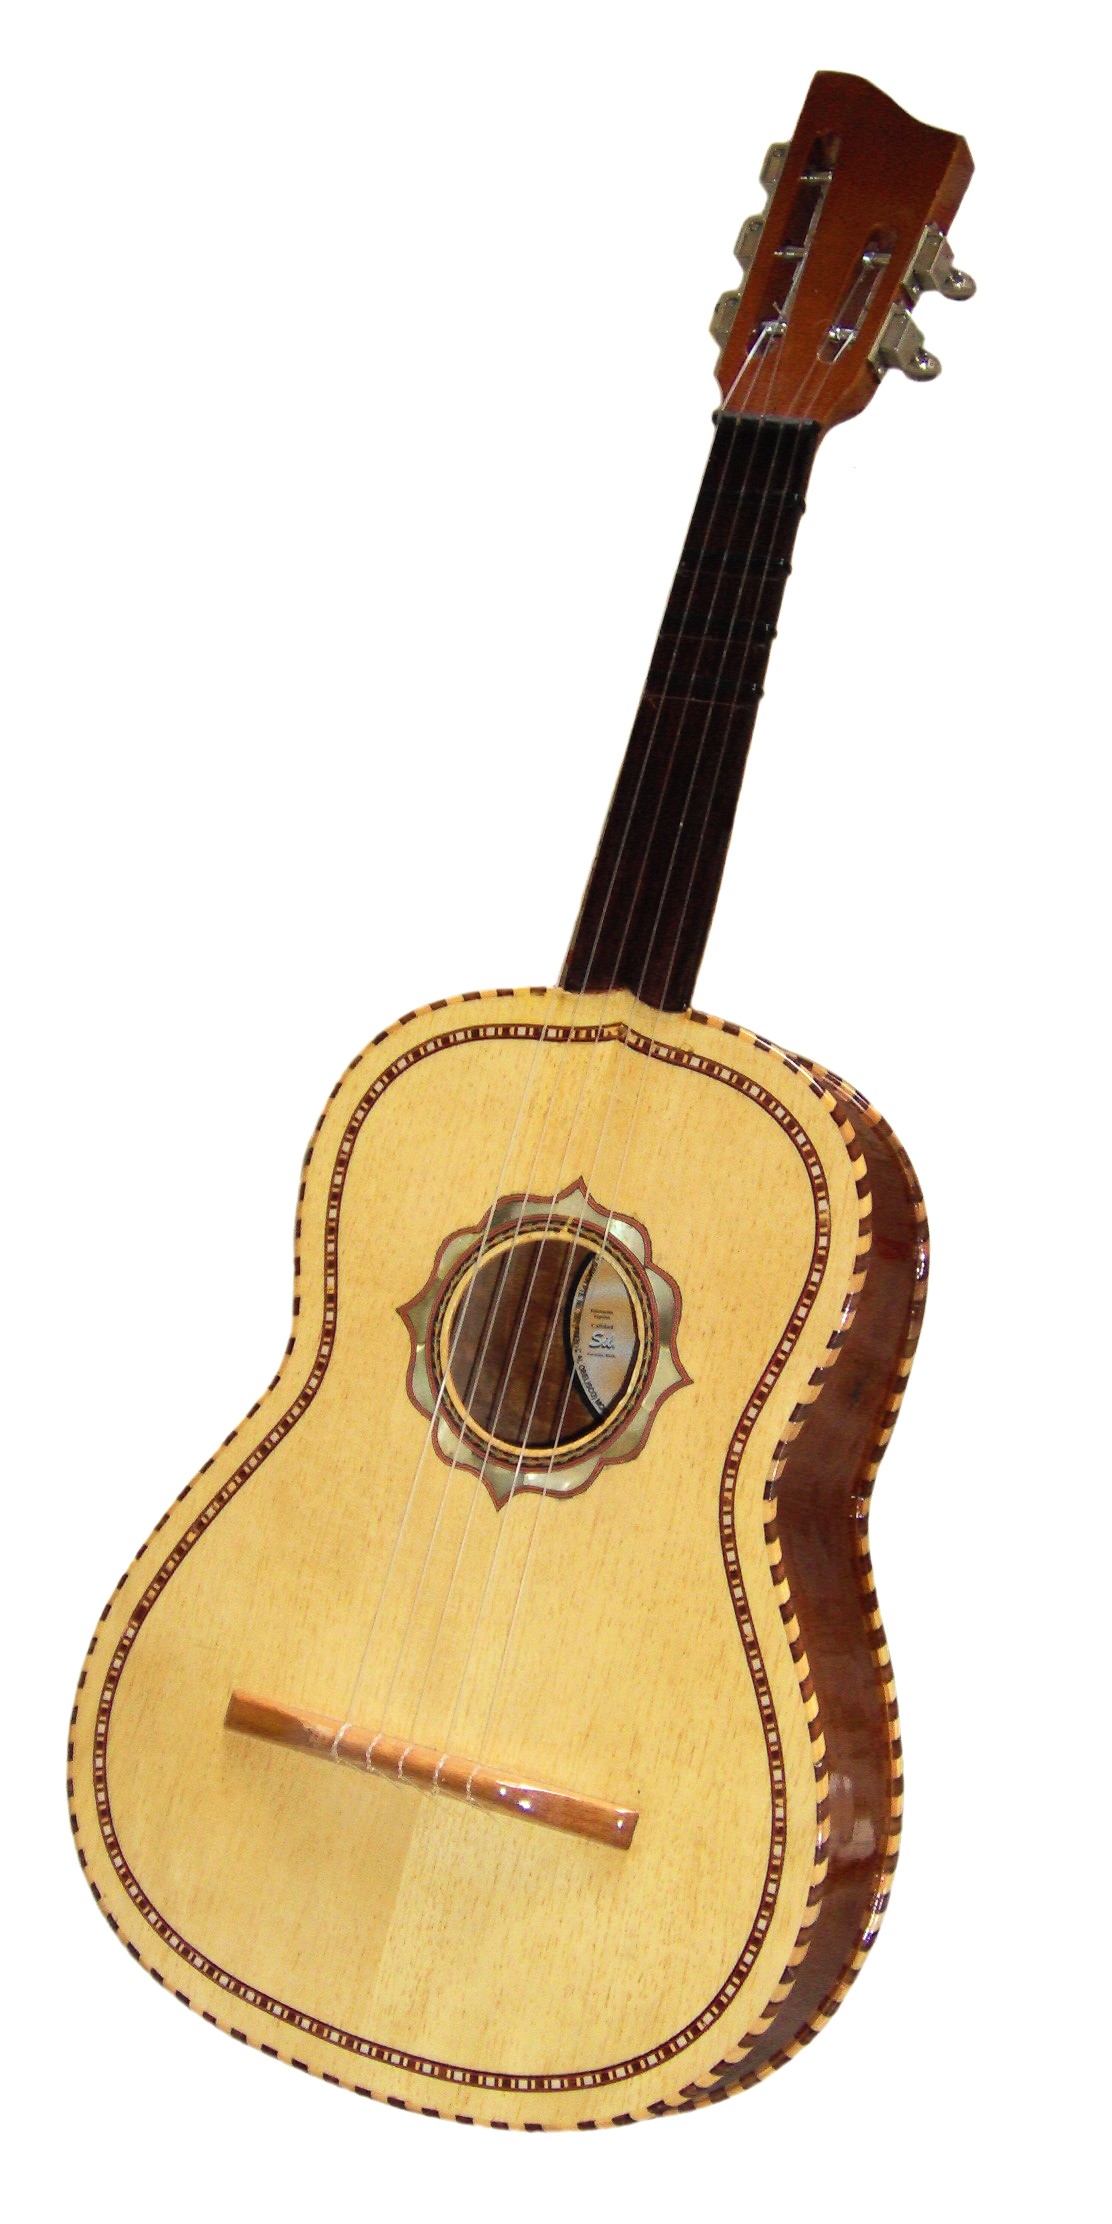 Guitar - Wikipedia